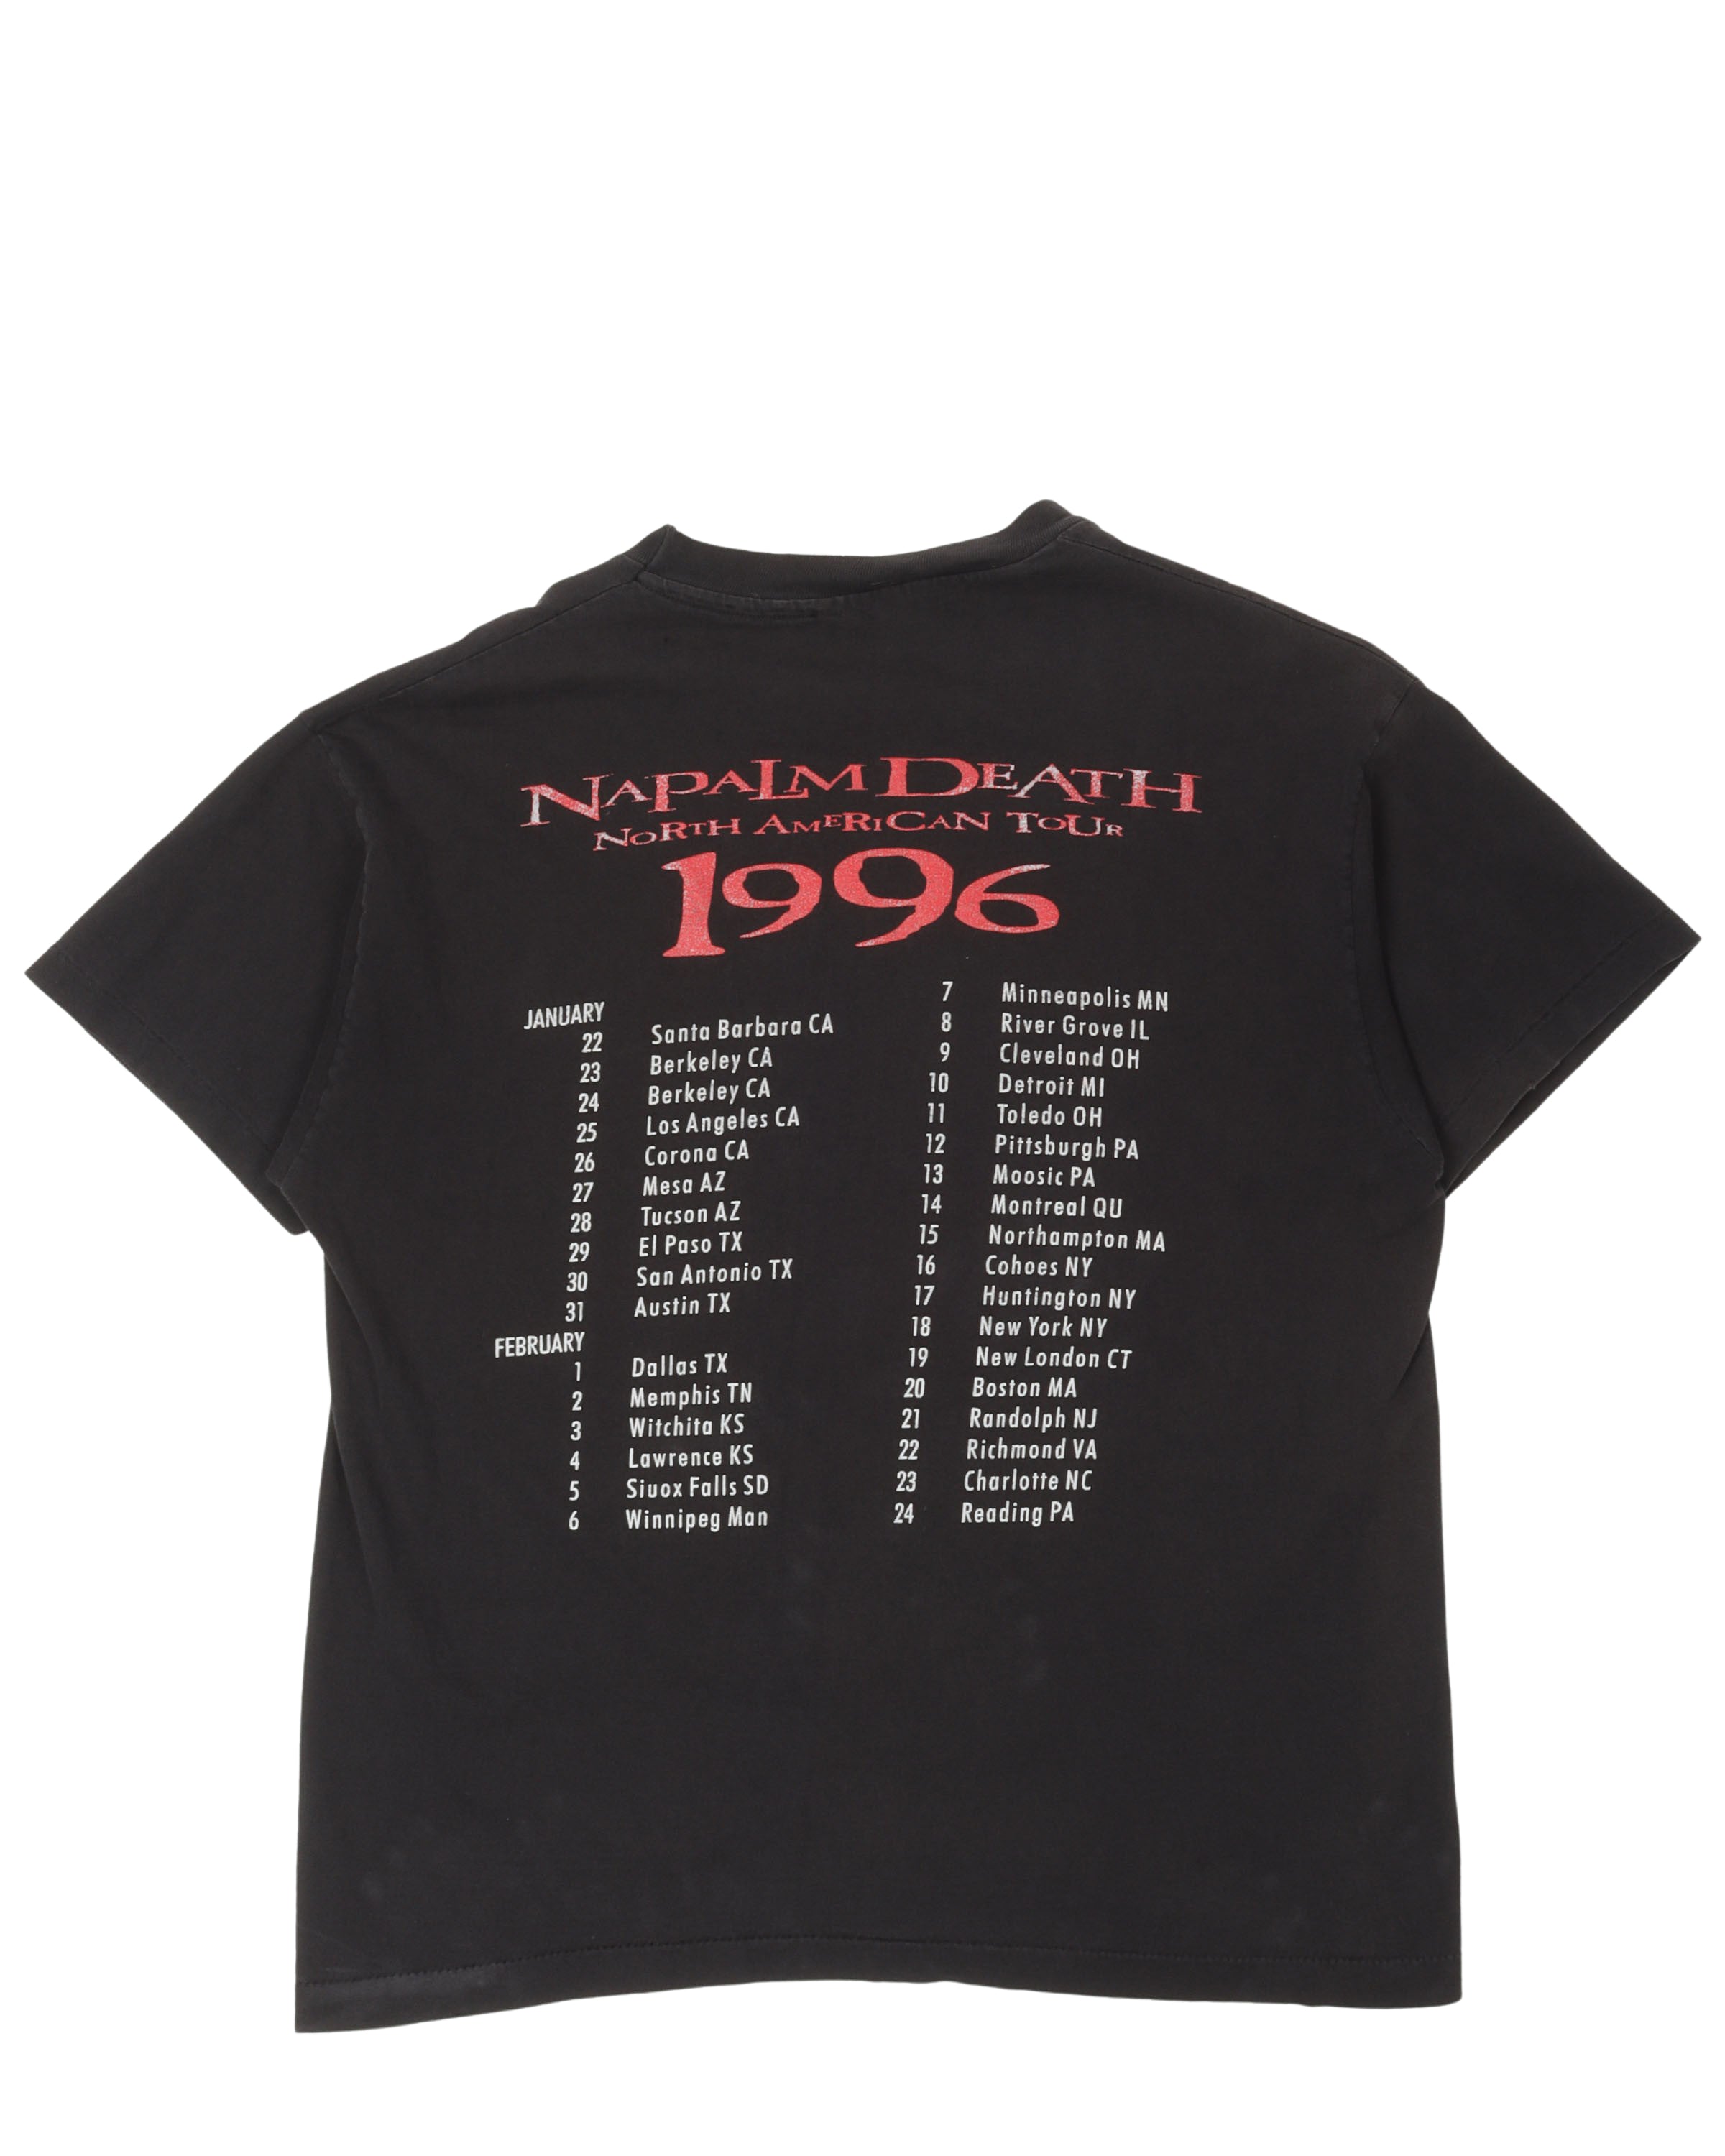 Napalm Death North American Tour 1996 T-Shirt